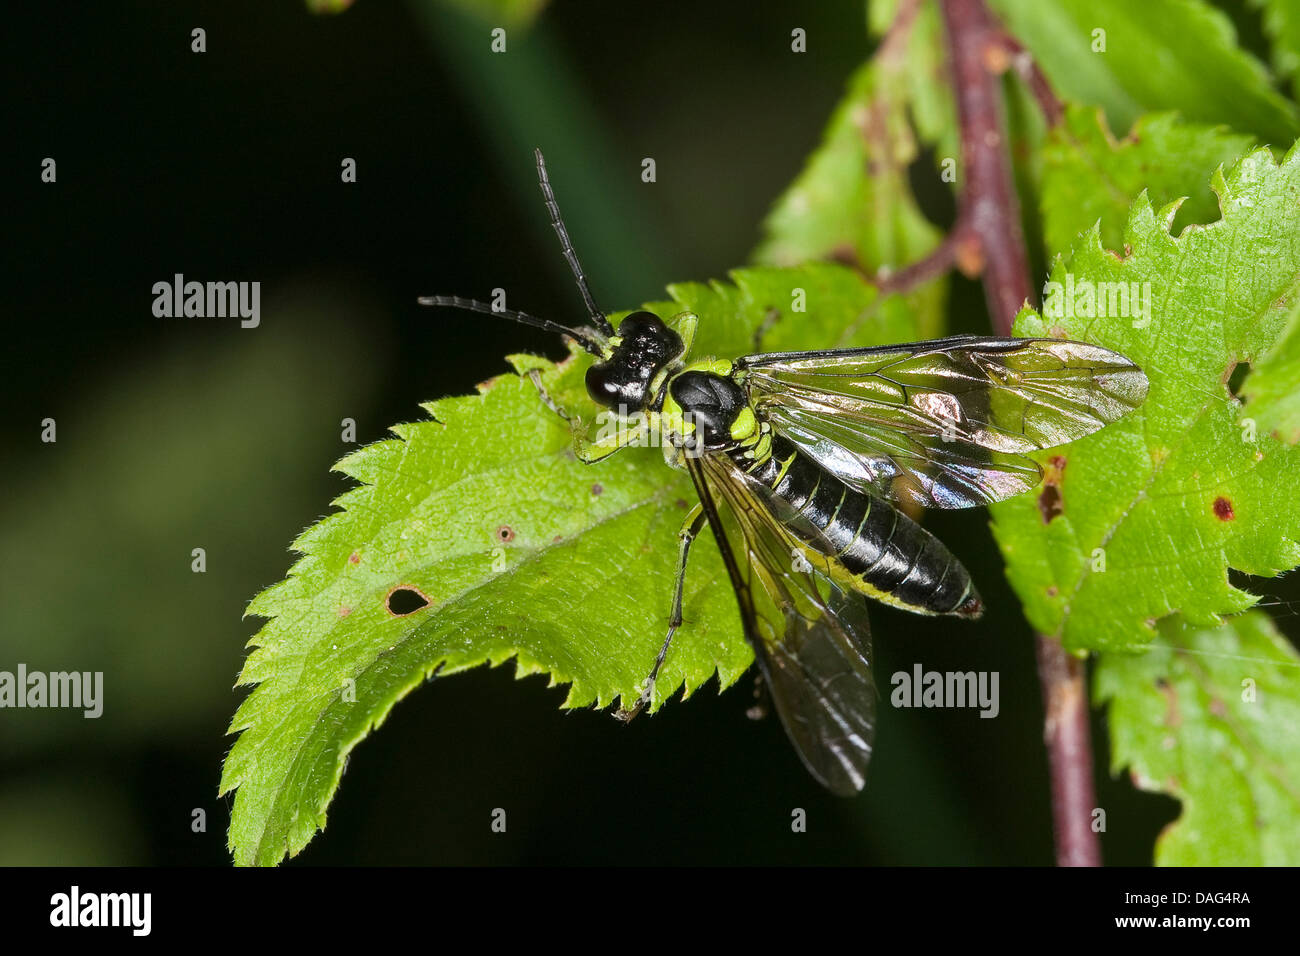 Sawfly, Saw-fly (Tenthredo mesomela, Eurogaster mesomela), sitting on a leaf, Germany Stock Photo